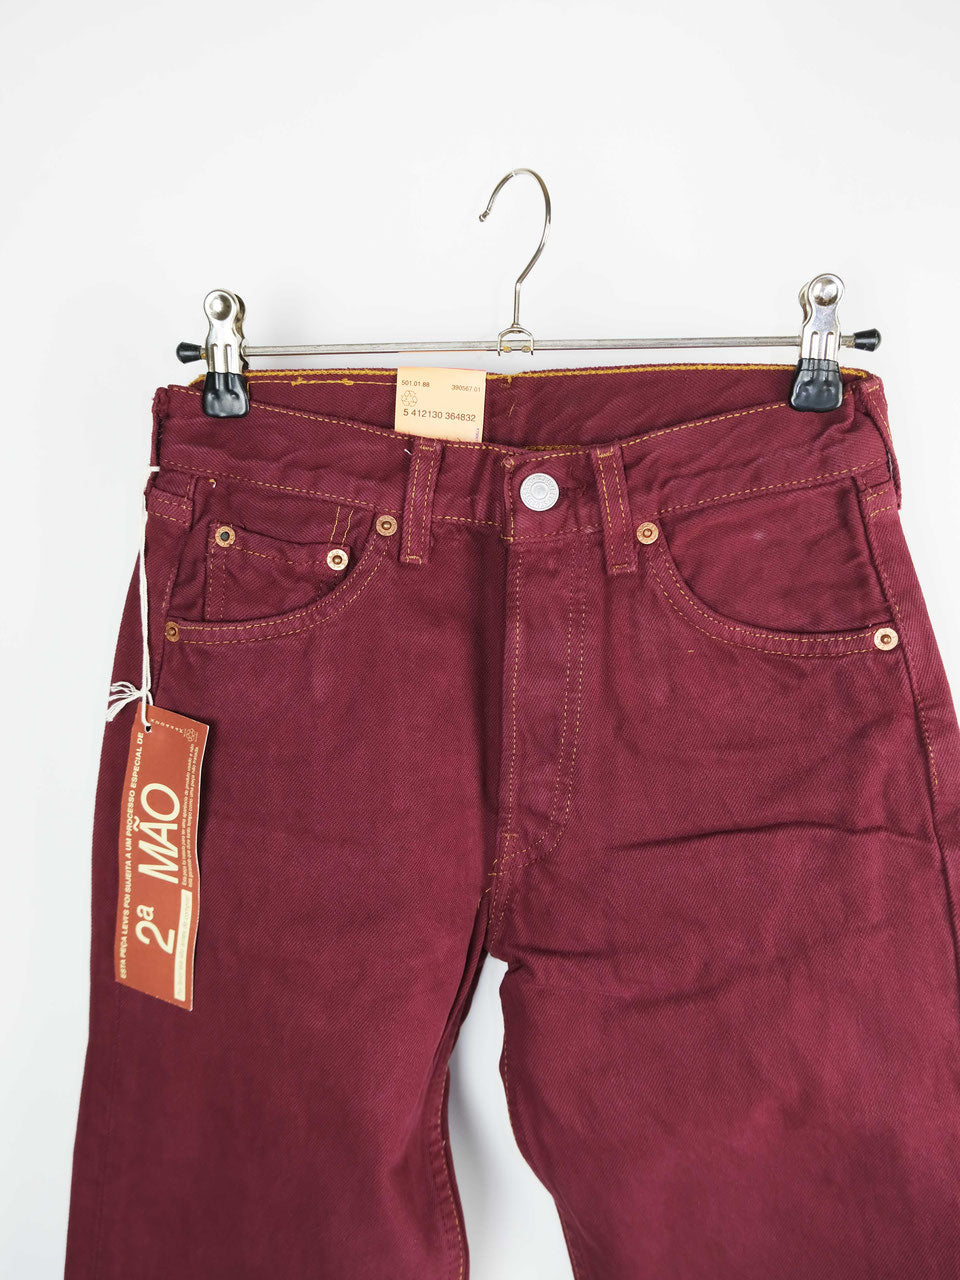 Levi's jeans burgundy deadstock